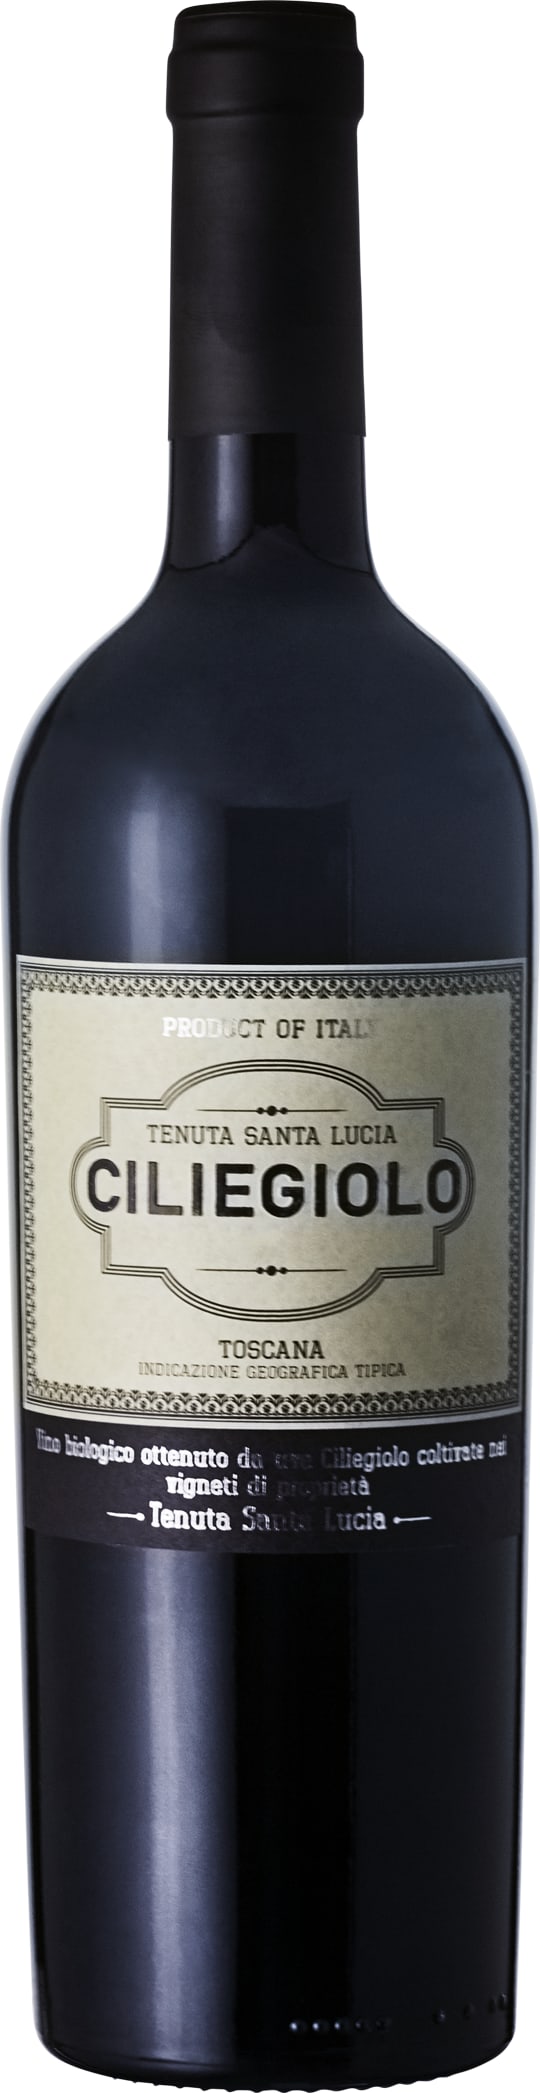 Tenuta Santa Lucia Ciliegiolo Organic 2018 75cl - Buy Tenuta Santa Lucia Wines from GREAT WINES DIRECT wine shop